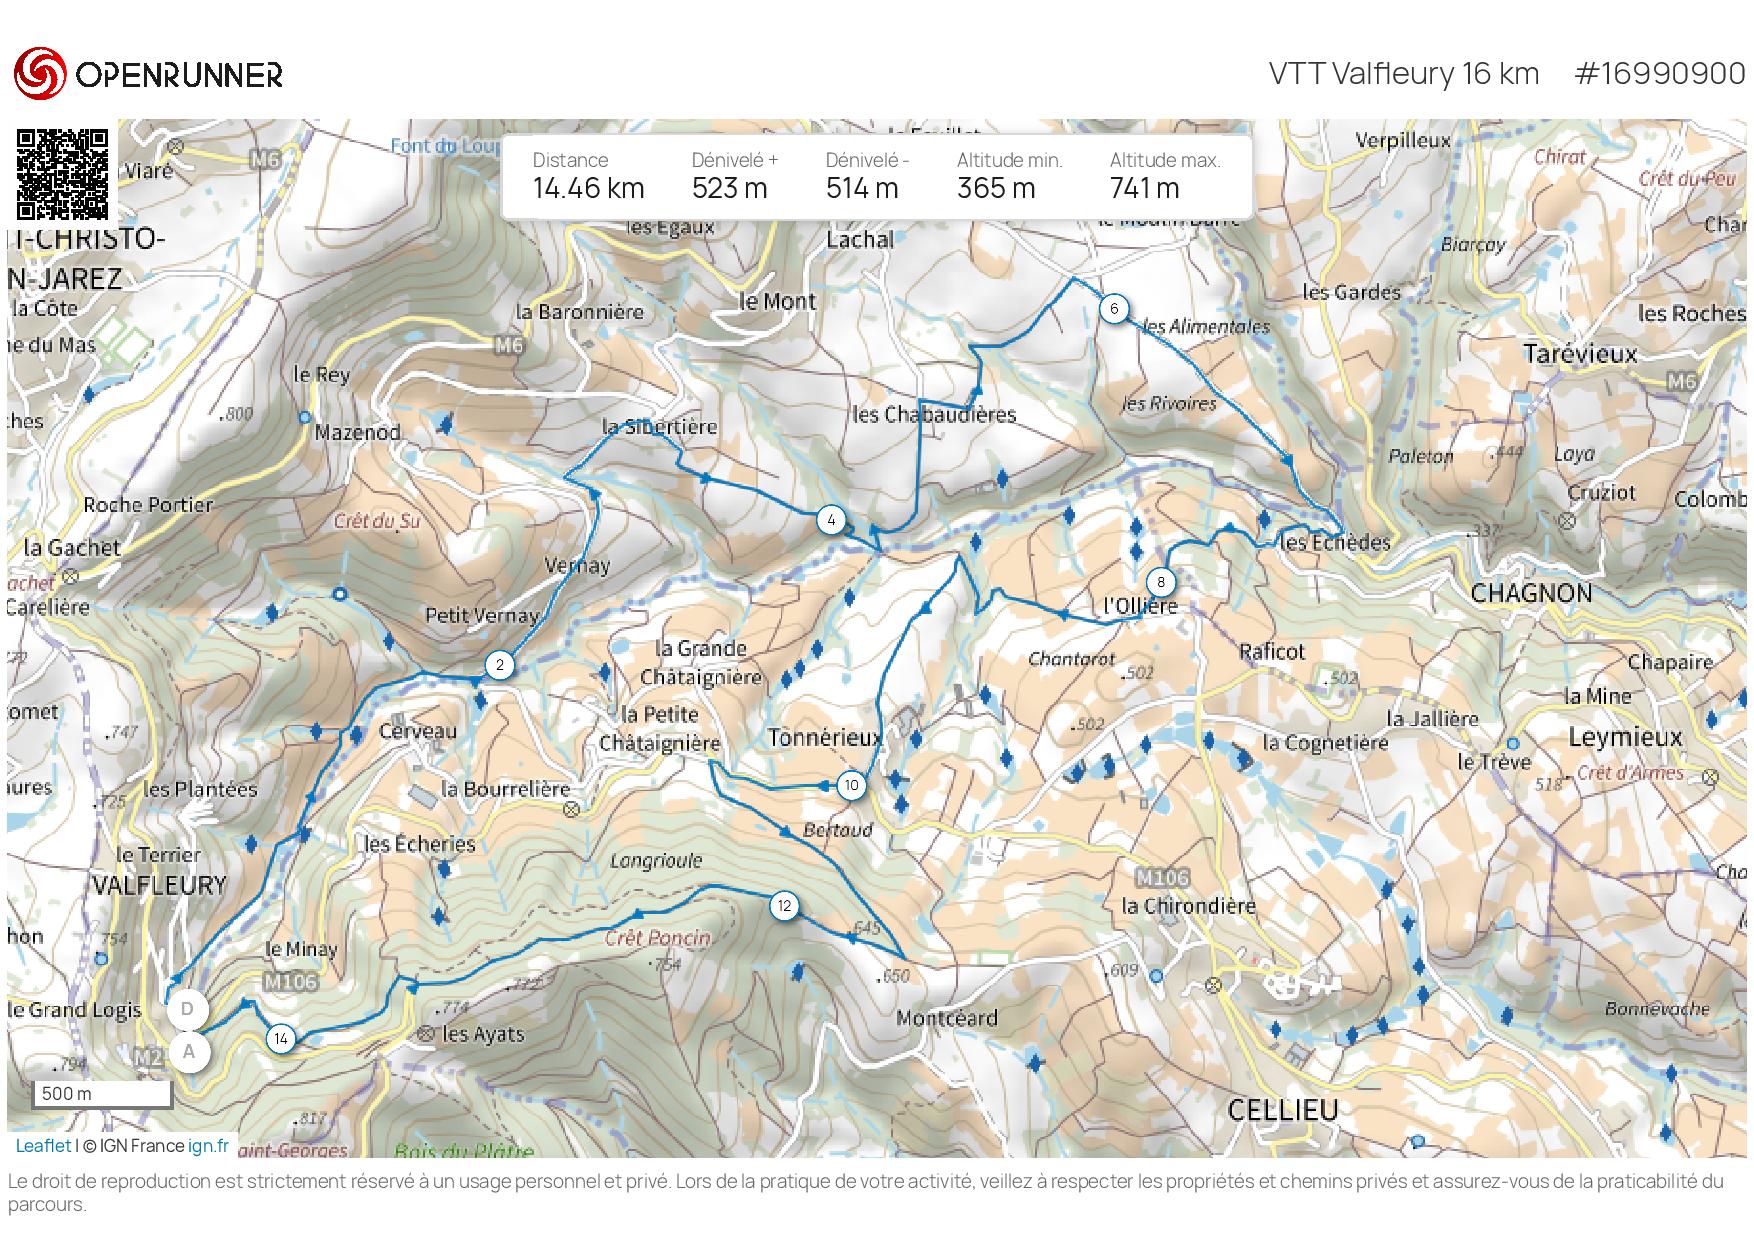 VTT Valfleury 16 km-page-001.jpg